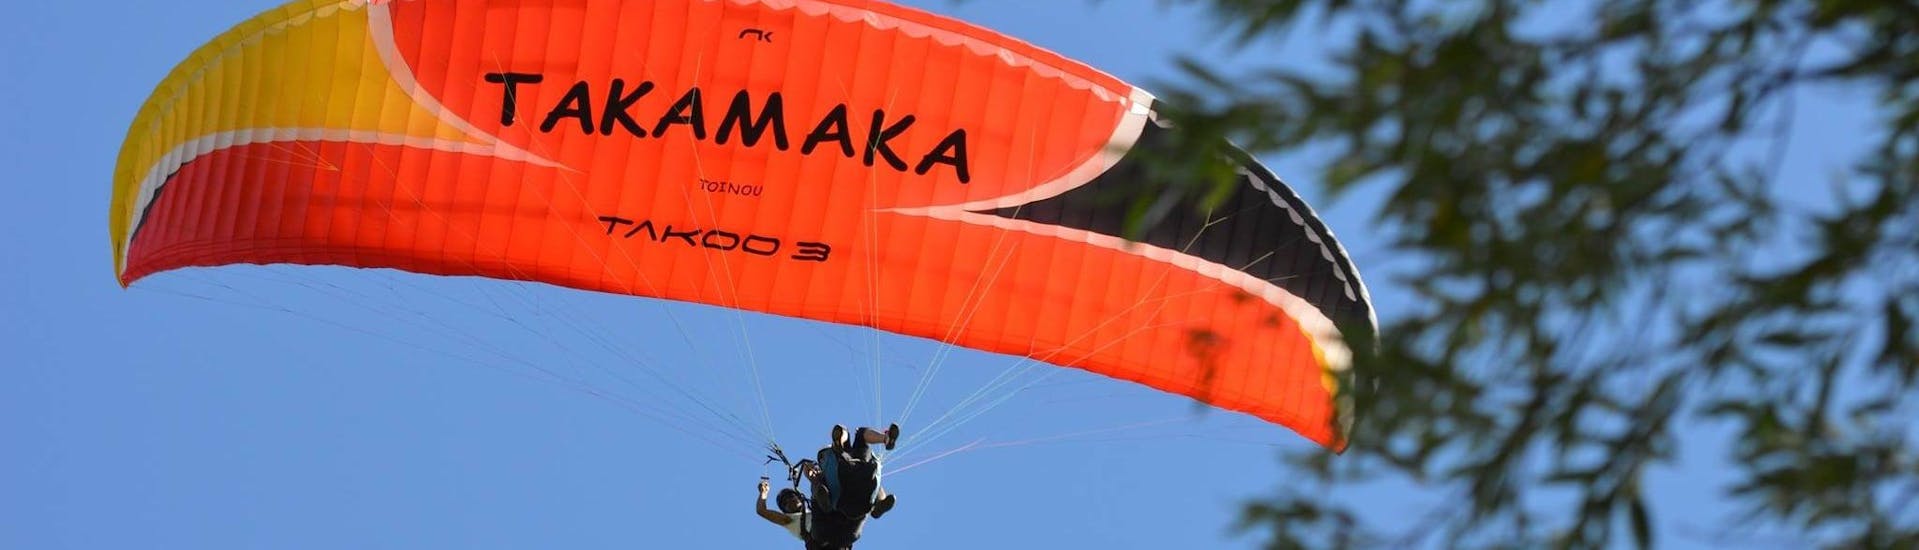 tandem-paragliding-performance-aix-les-bains-takamaka-aix-les-bains-hero